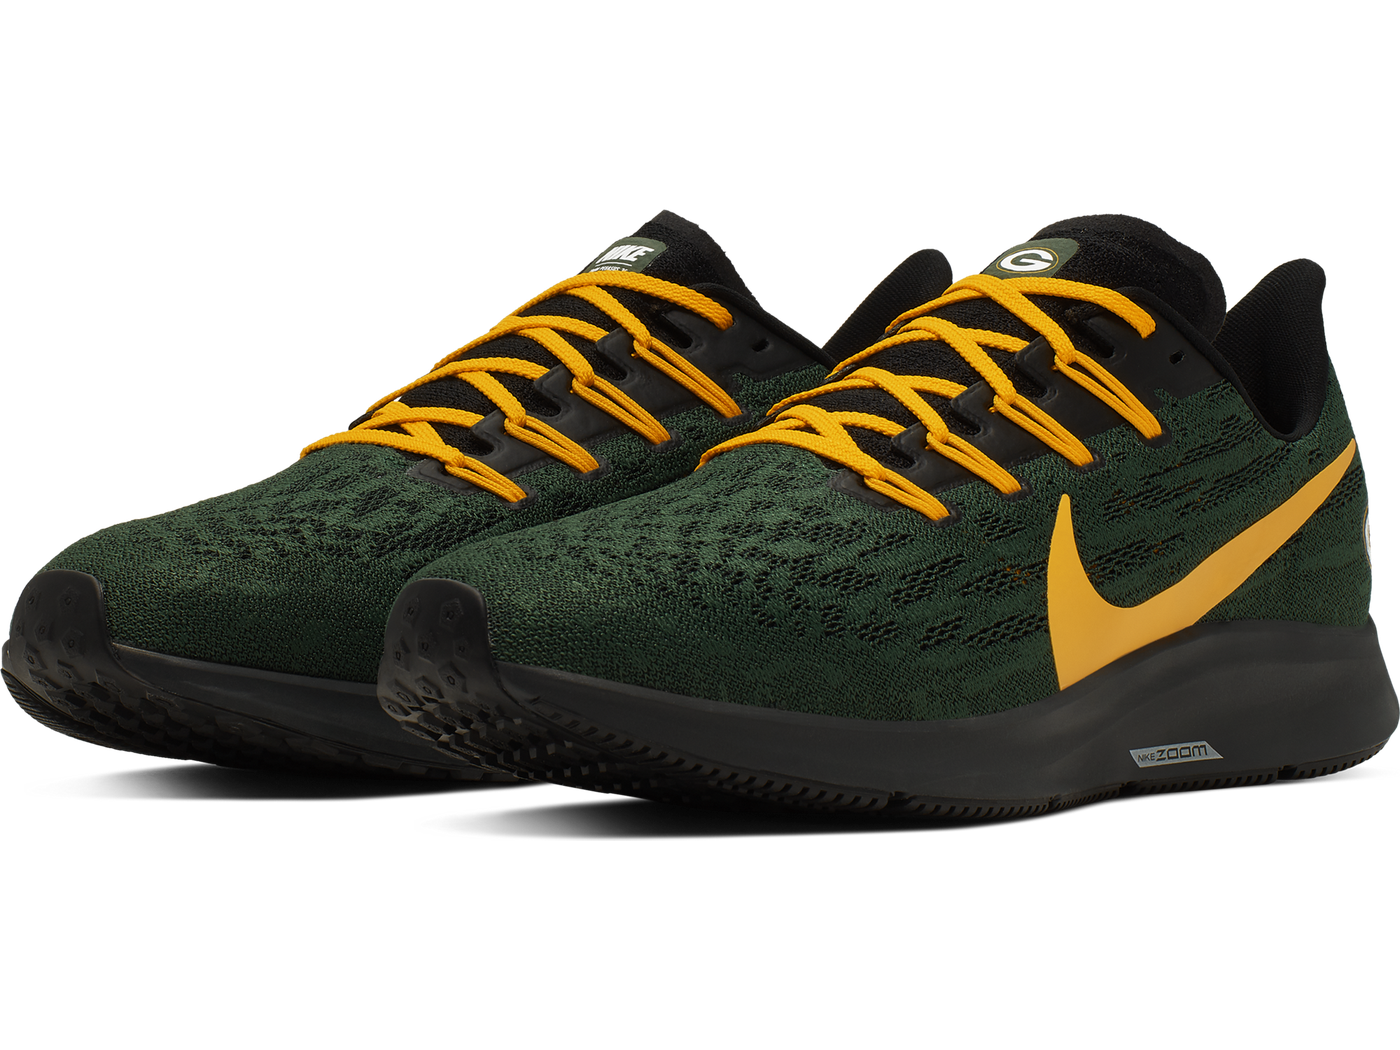 Nike drops new Air Zoom Pegasus 36 Green Bay Packers shoe